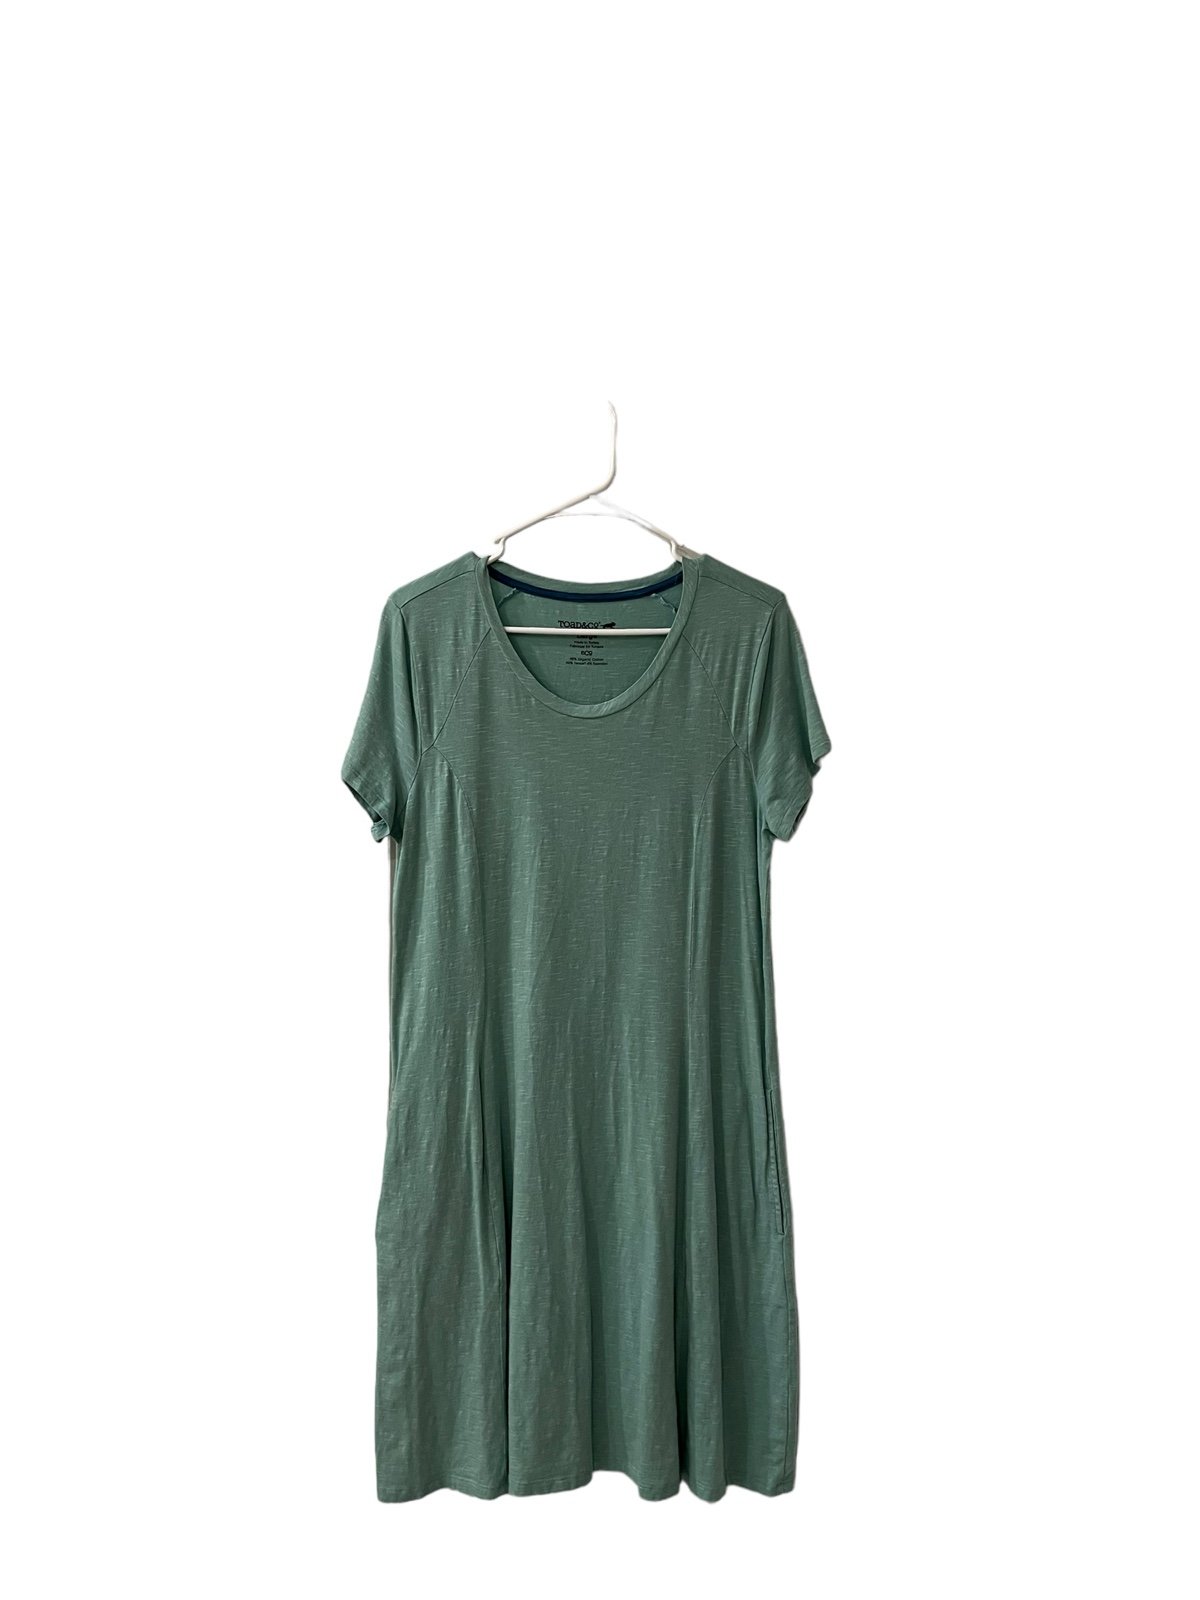 Latest  Toad & Co Blue Green Dress Size Lg NoY2t80SQ ju